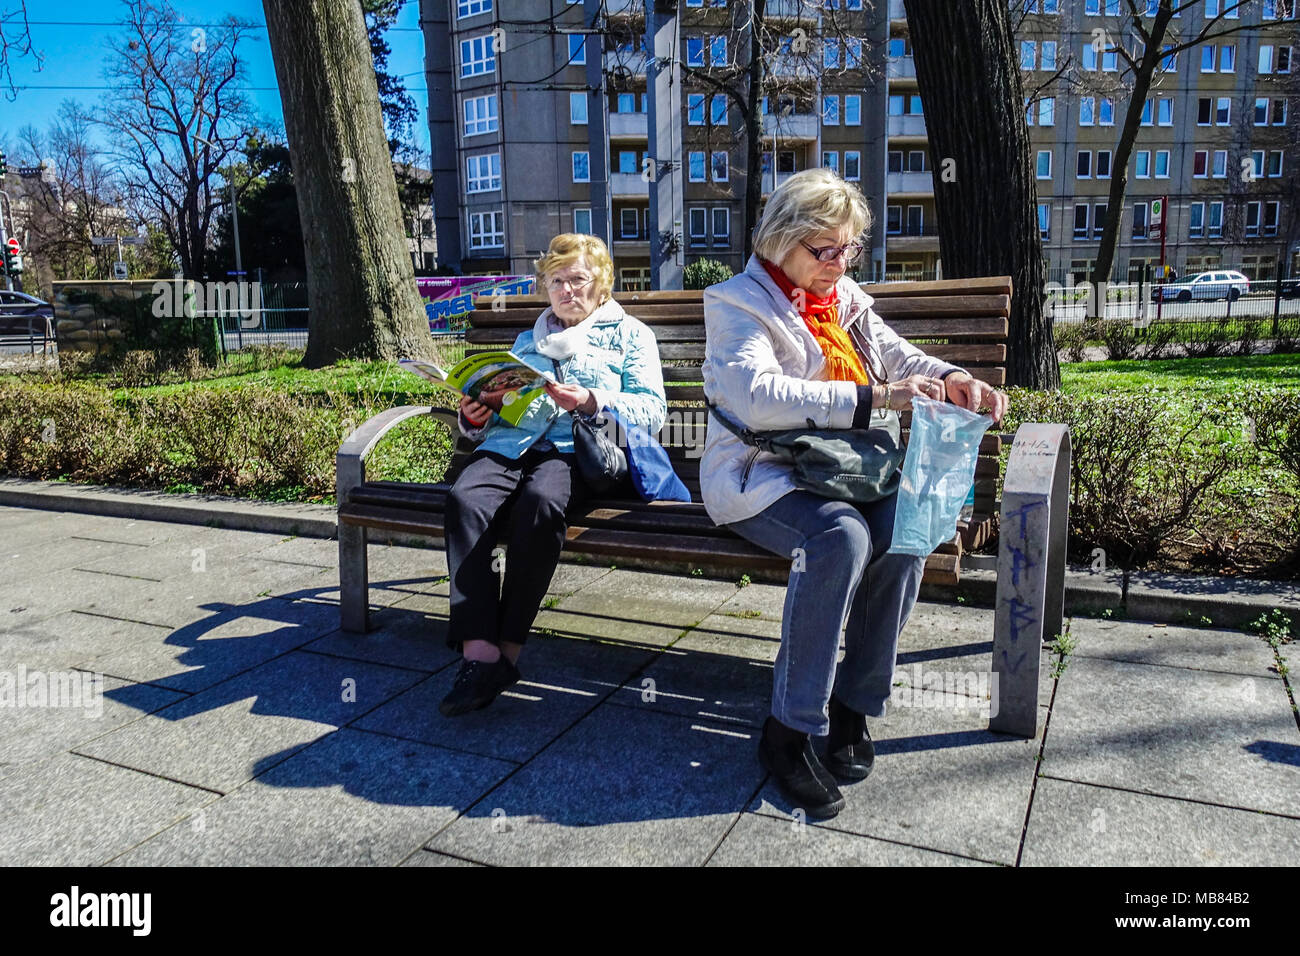 Panchina anziana, due donne anziane su una panchina del parco. Neustadt, Dresda, Germania vecchie donne panchina Germania anziani anziani invecchiamento popolazione Foto Stock